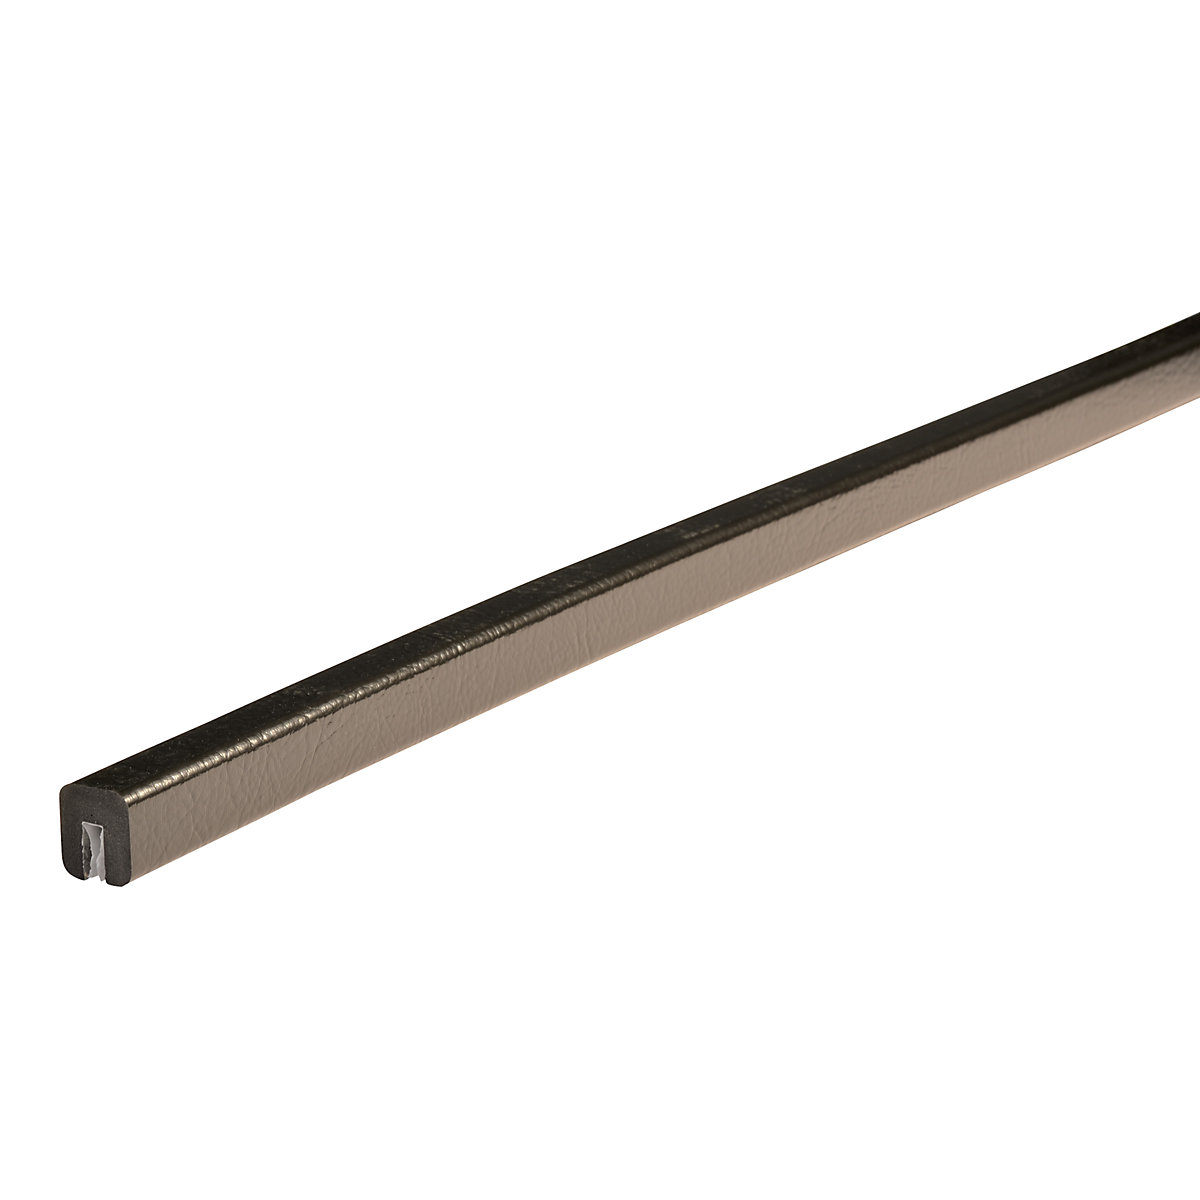 Knuffi® edge protection – SHG, type G, 1 x 5 m roll, black-22